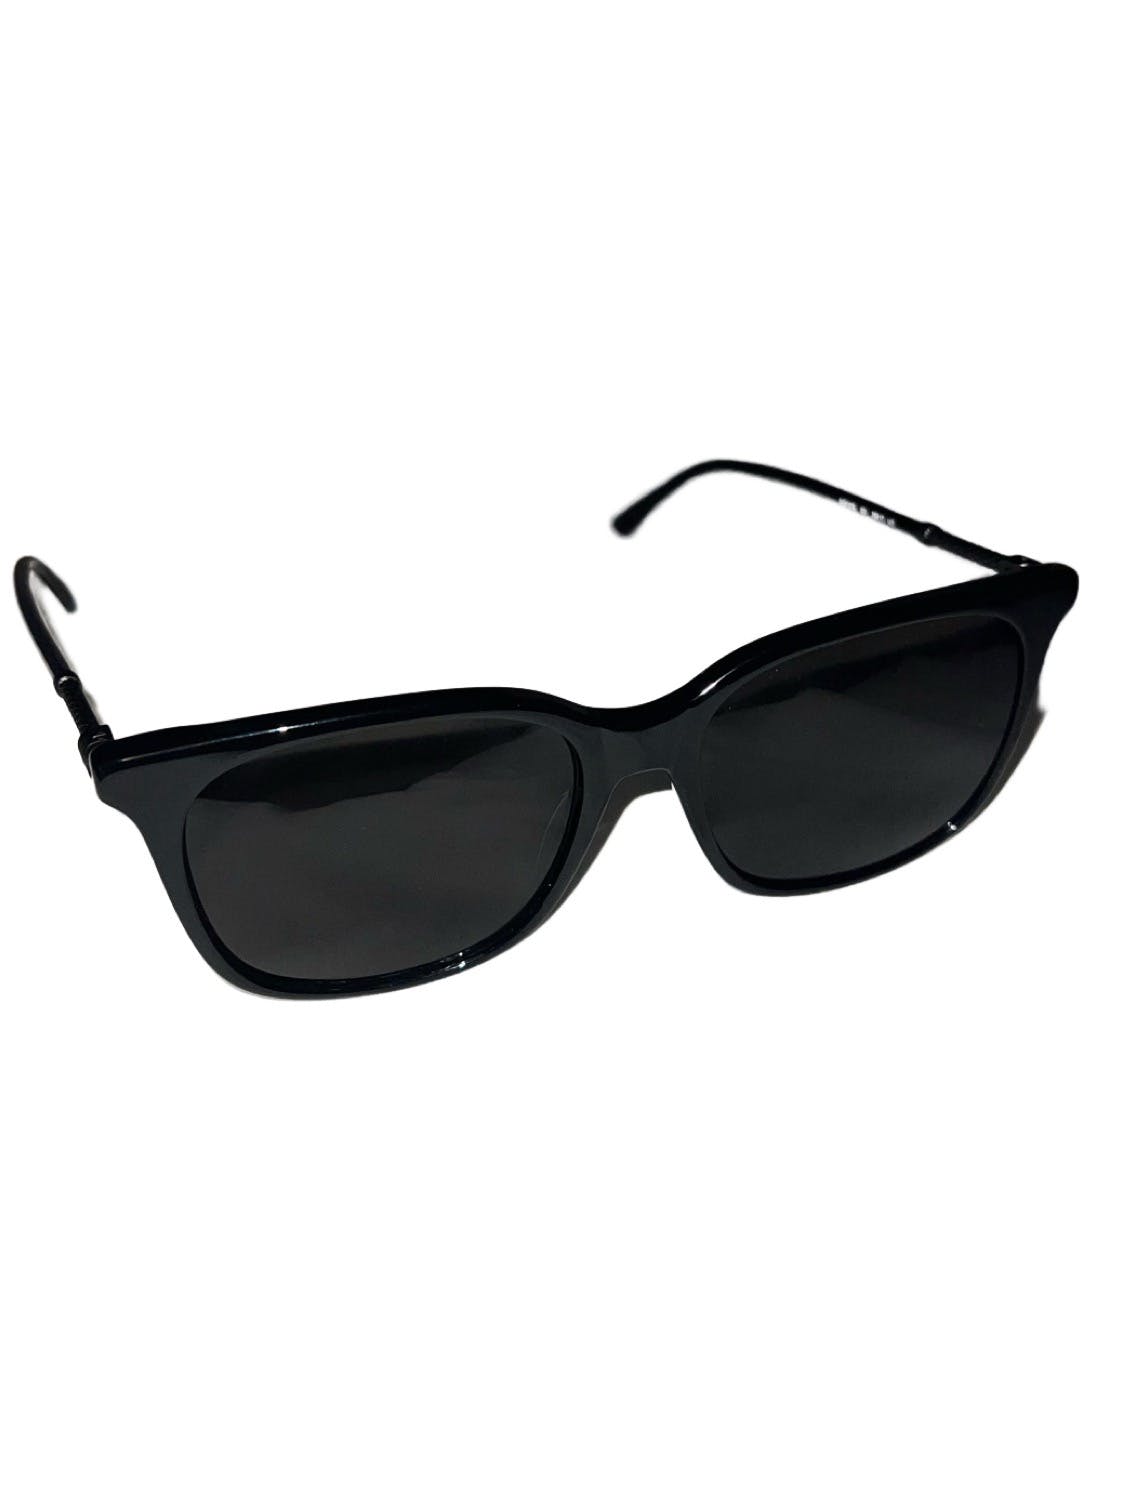 Thin frame sunglasses - 3